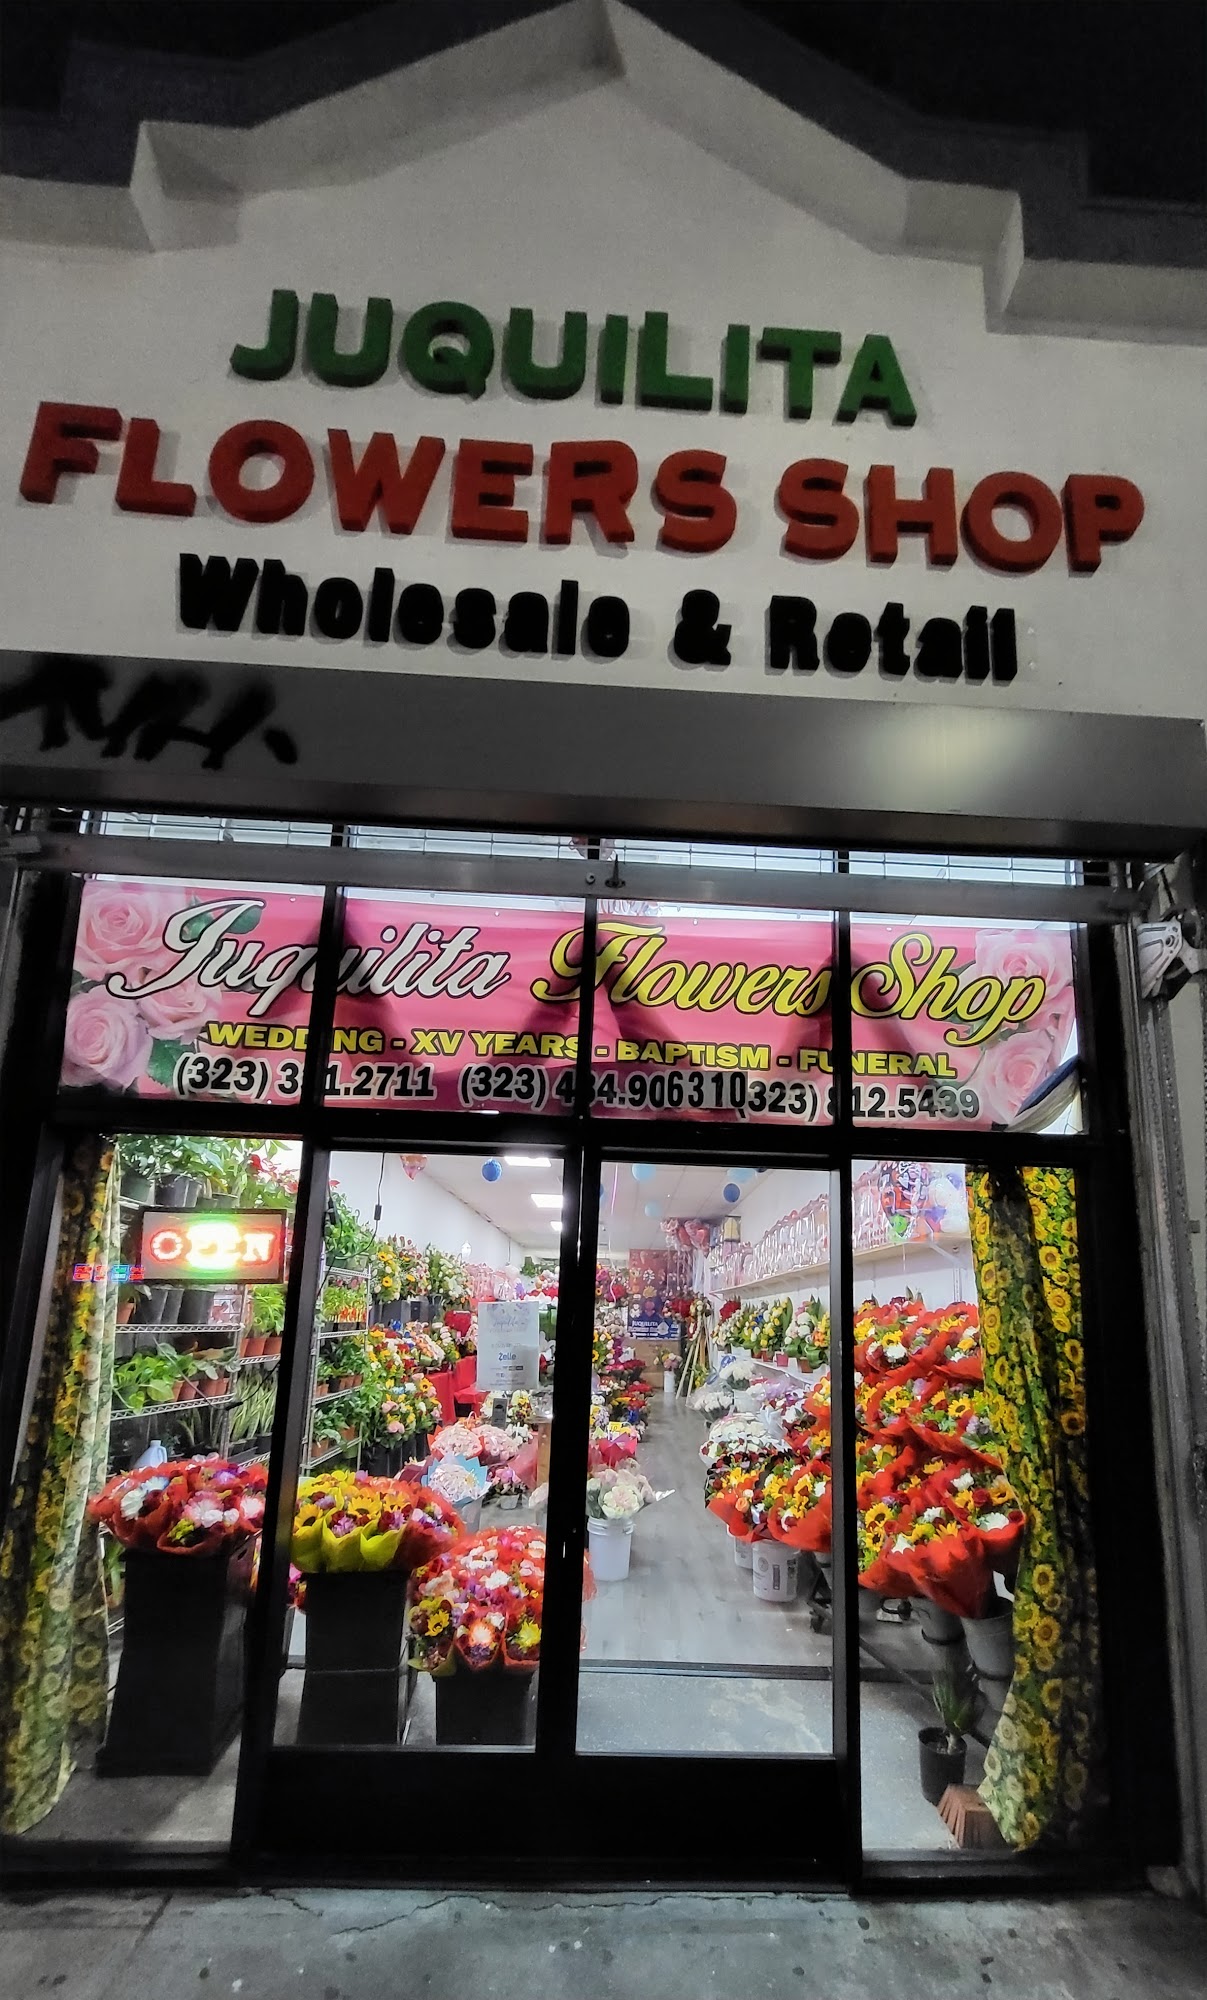 Juquilita flowers shop